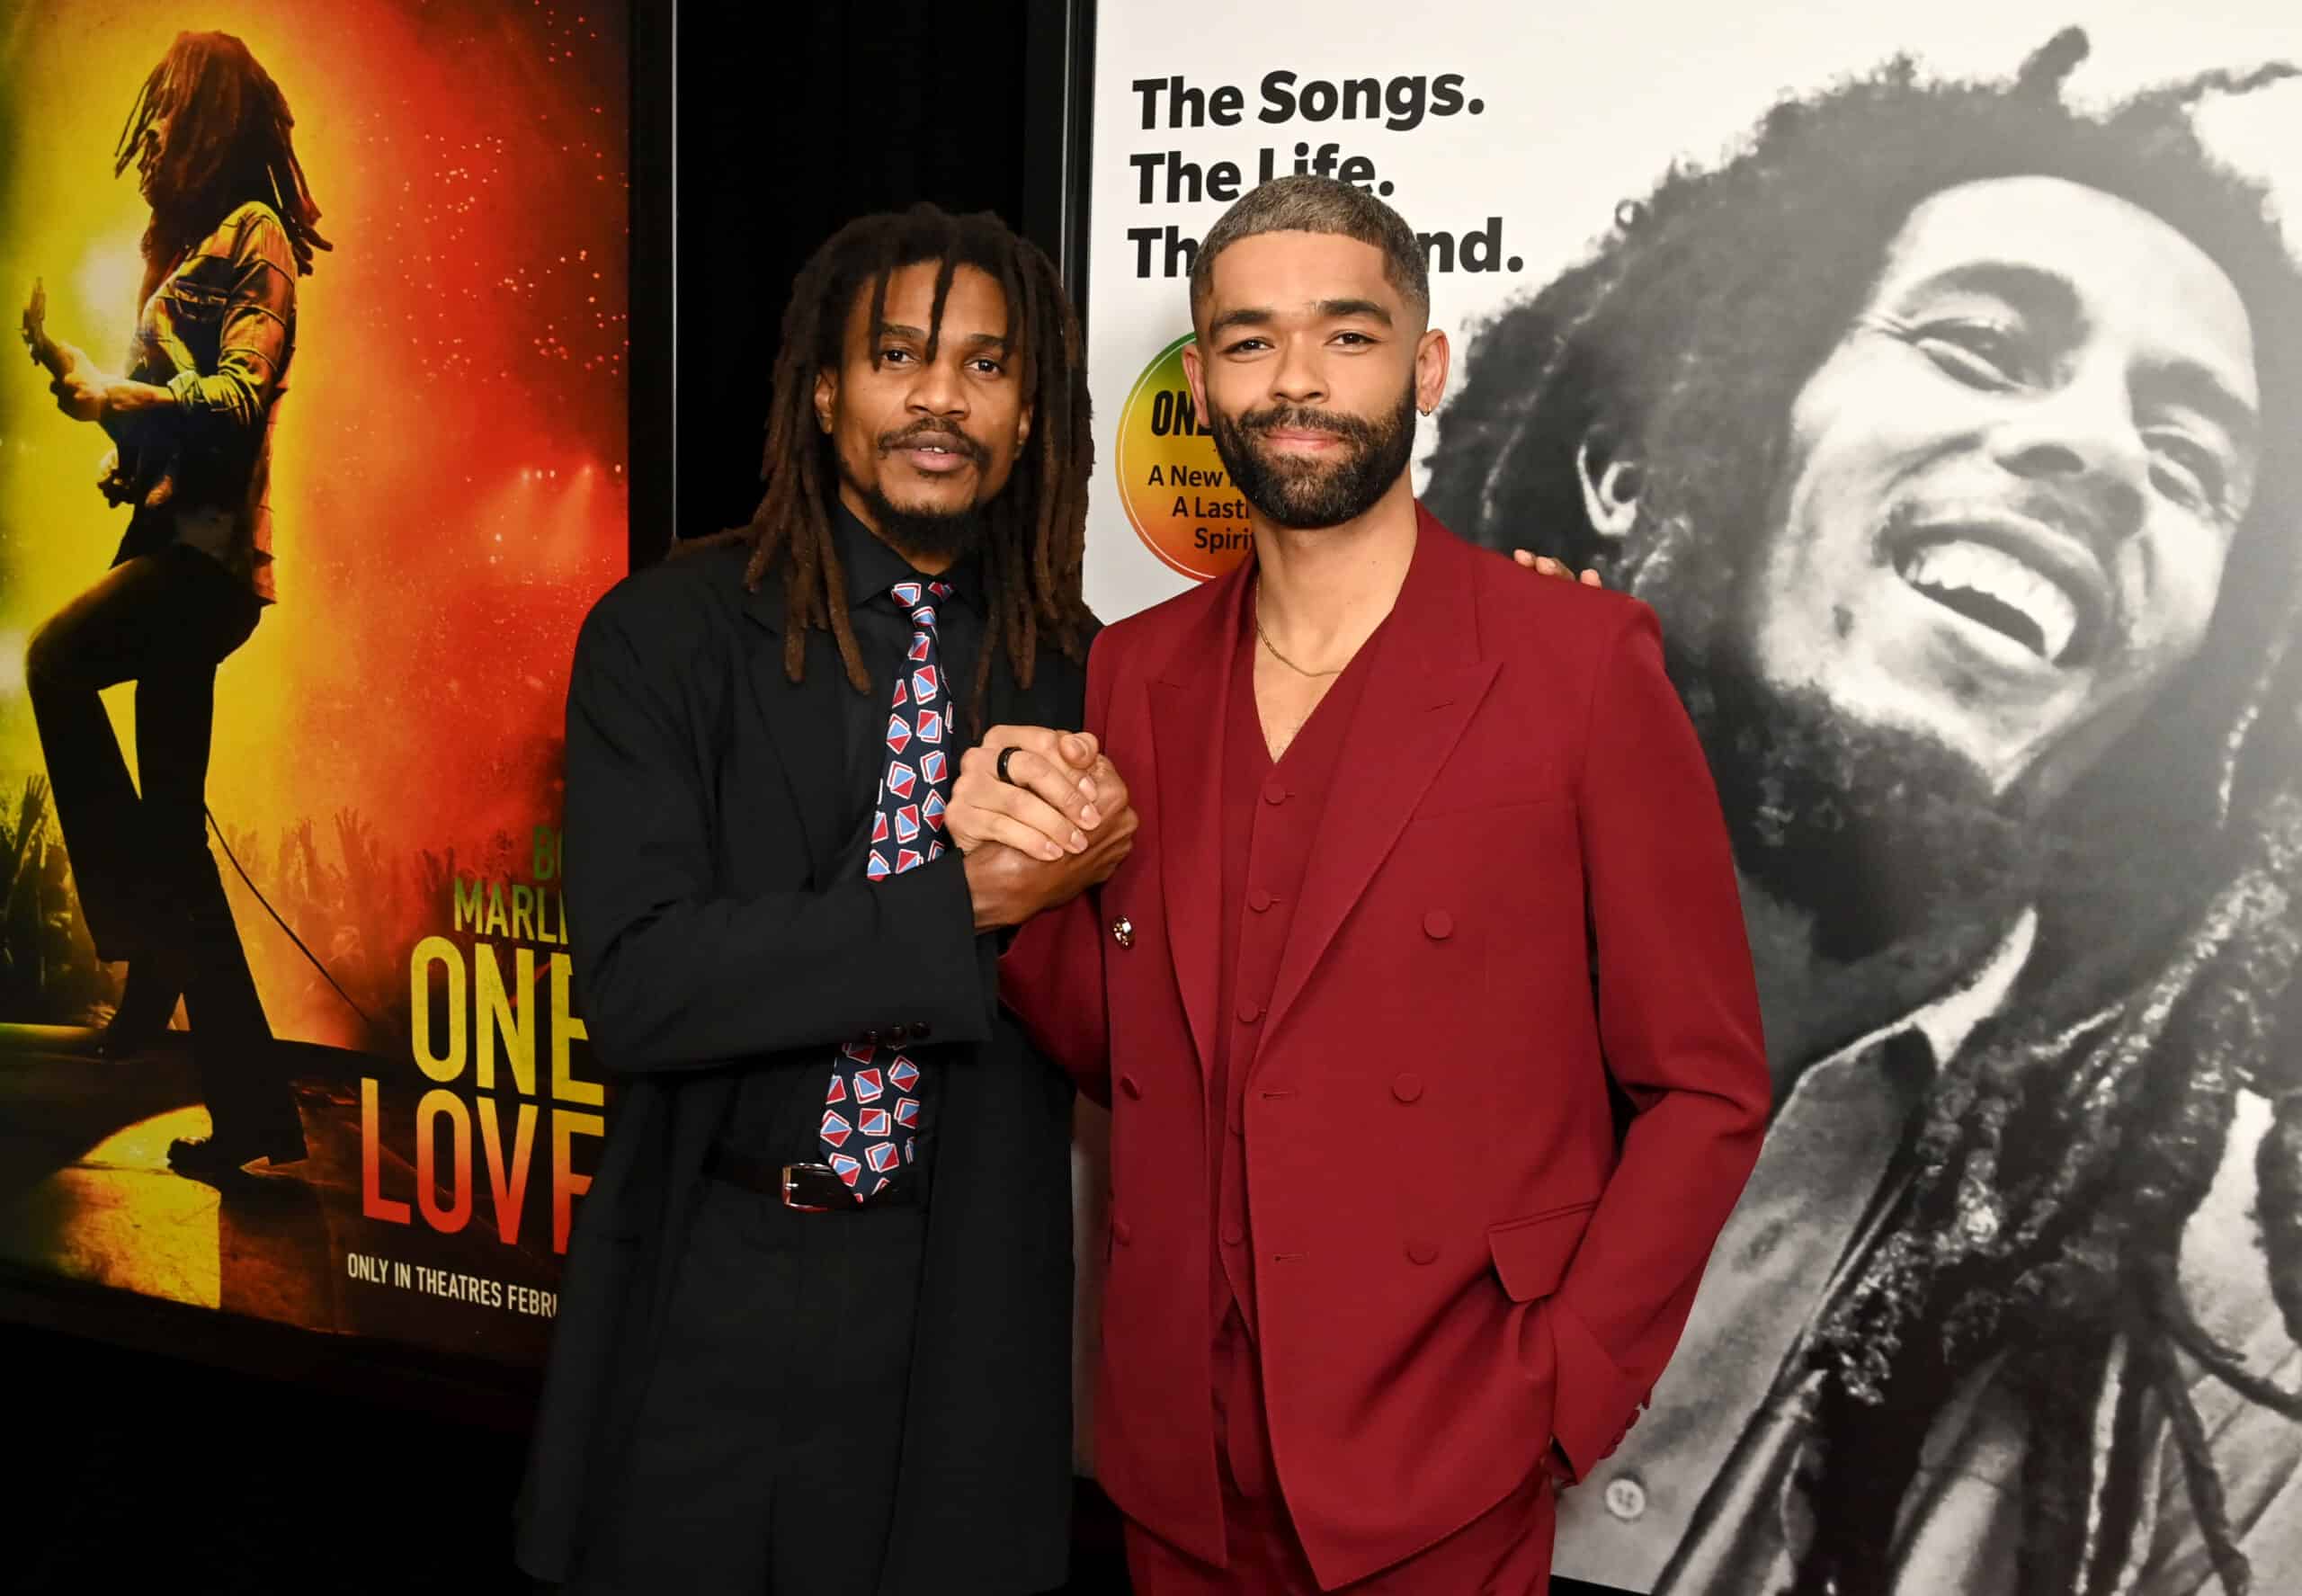 "Bob Marley: One Love" Dotdash Meredith Special Screening